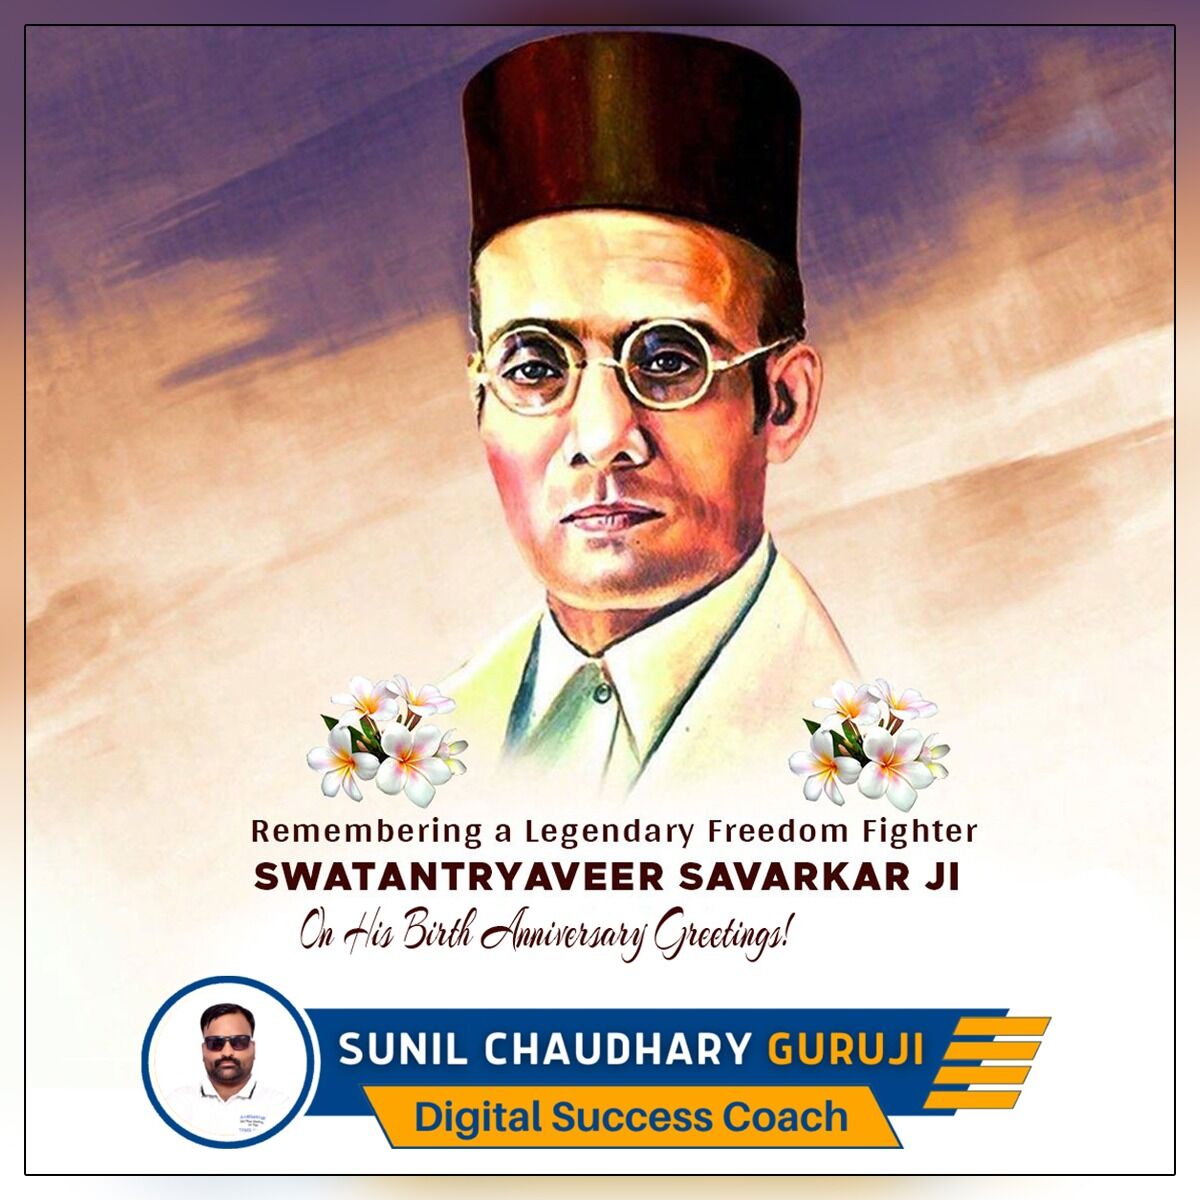 'Remembering Swatantrya Veer Savarkar,
the epitome of selflessness, patriotism & courage,
on his Birth Anniversary
#Savarkar #VeerSavarkar #Swatantra #Parliament #Inauguration #News 
 #Suniltams #Guruji #Aligarh #India #DigitalMarketingCoach #DigitalCoach